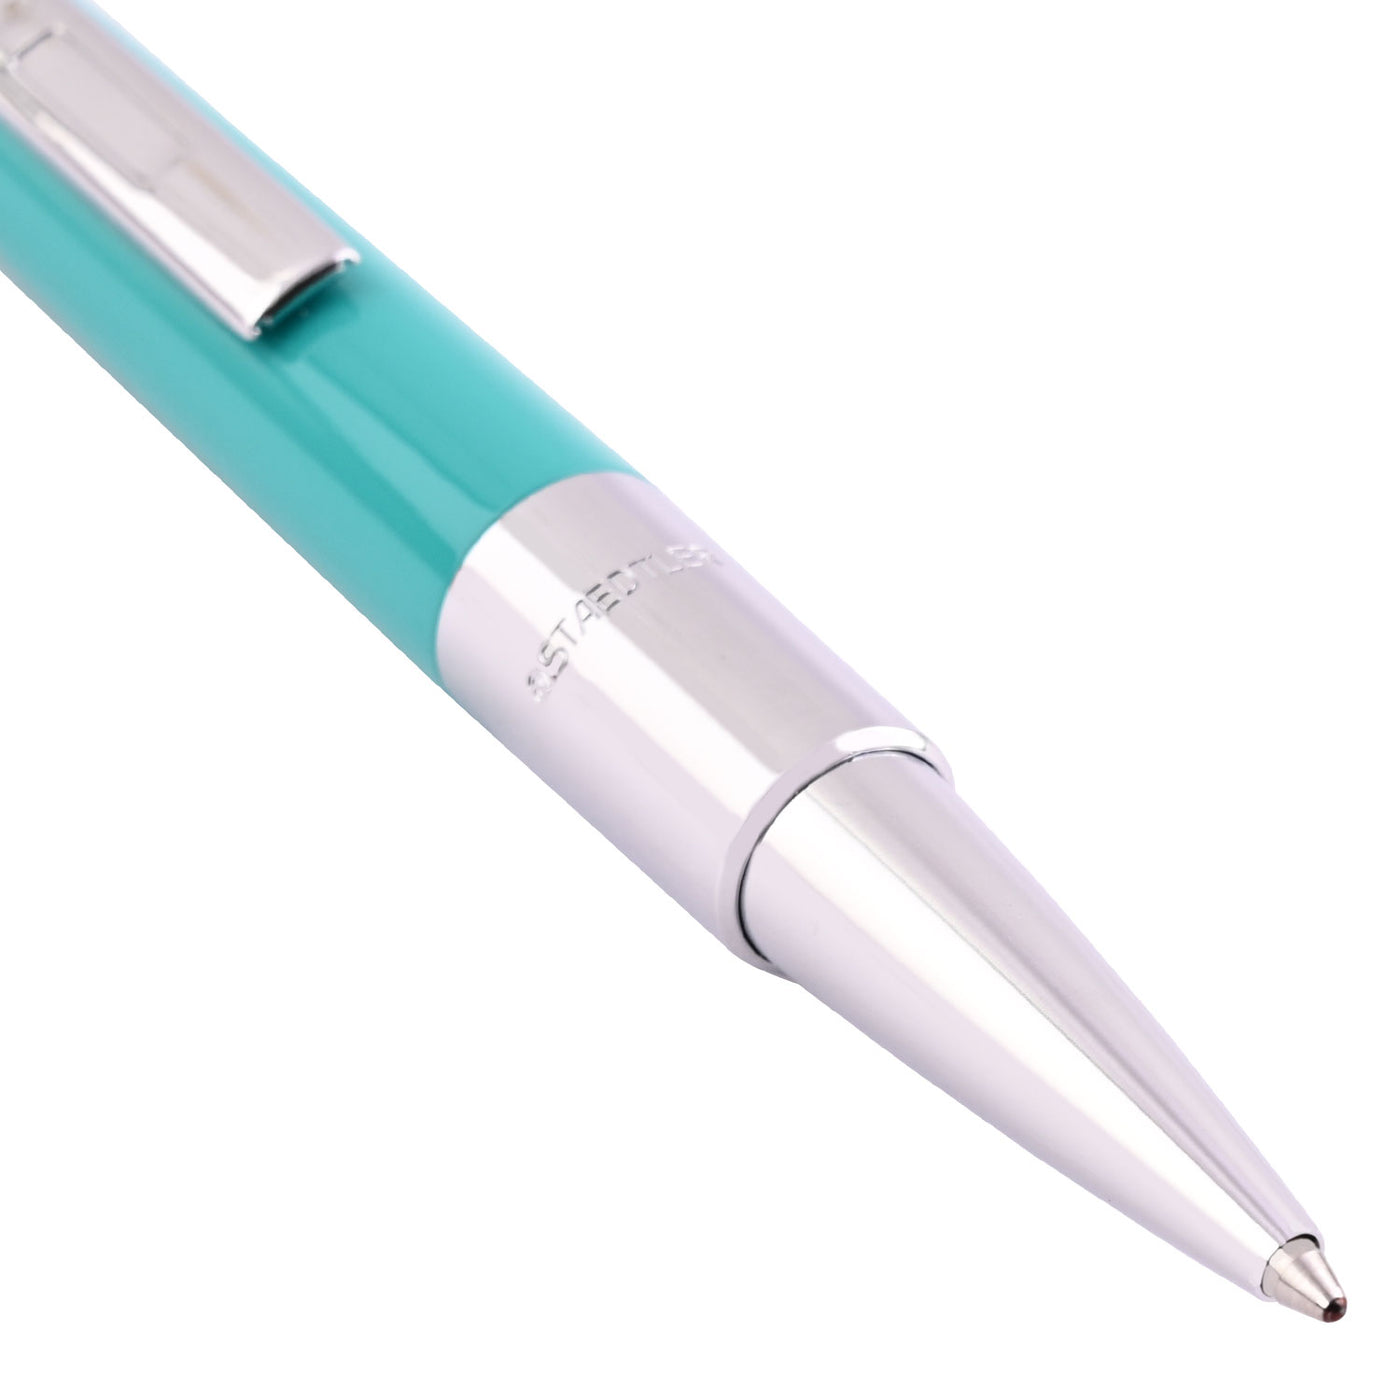 Staedtler Premium Resina Ball Pen - Turquoise CT 2